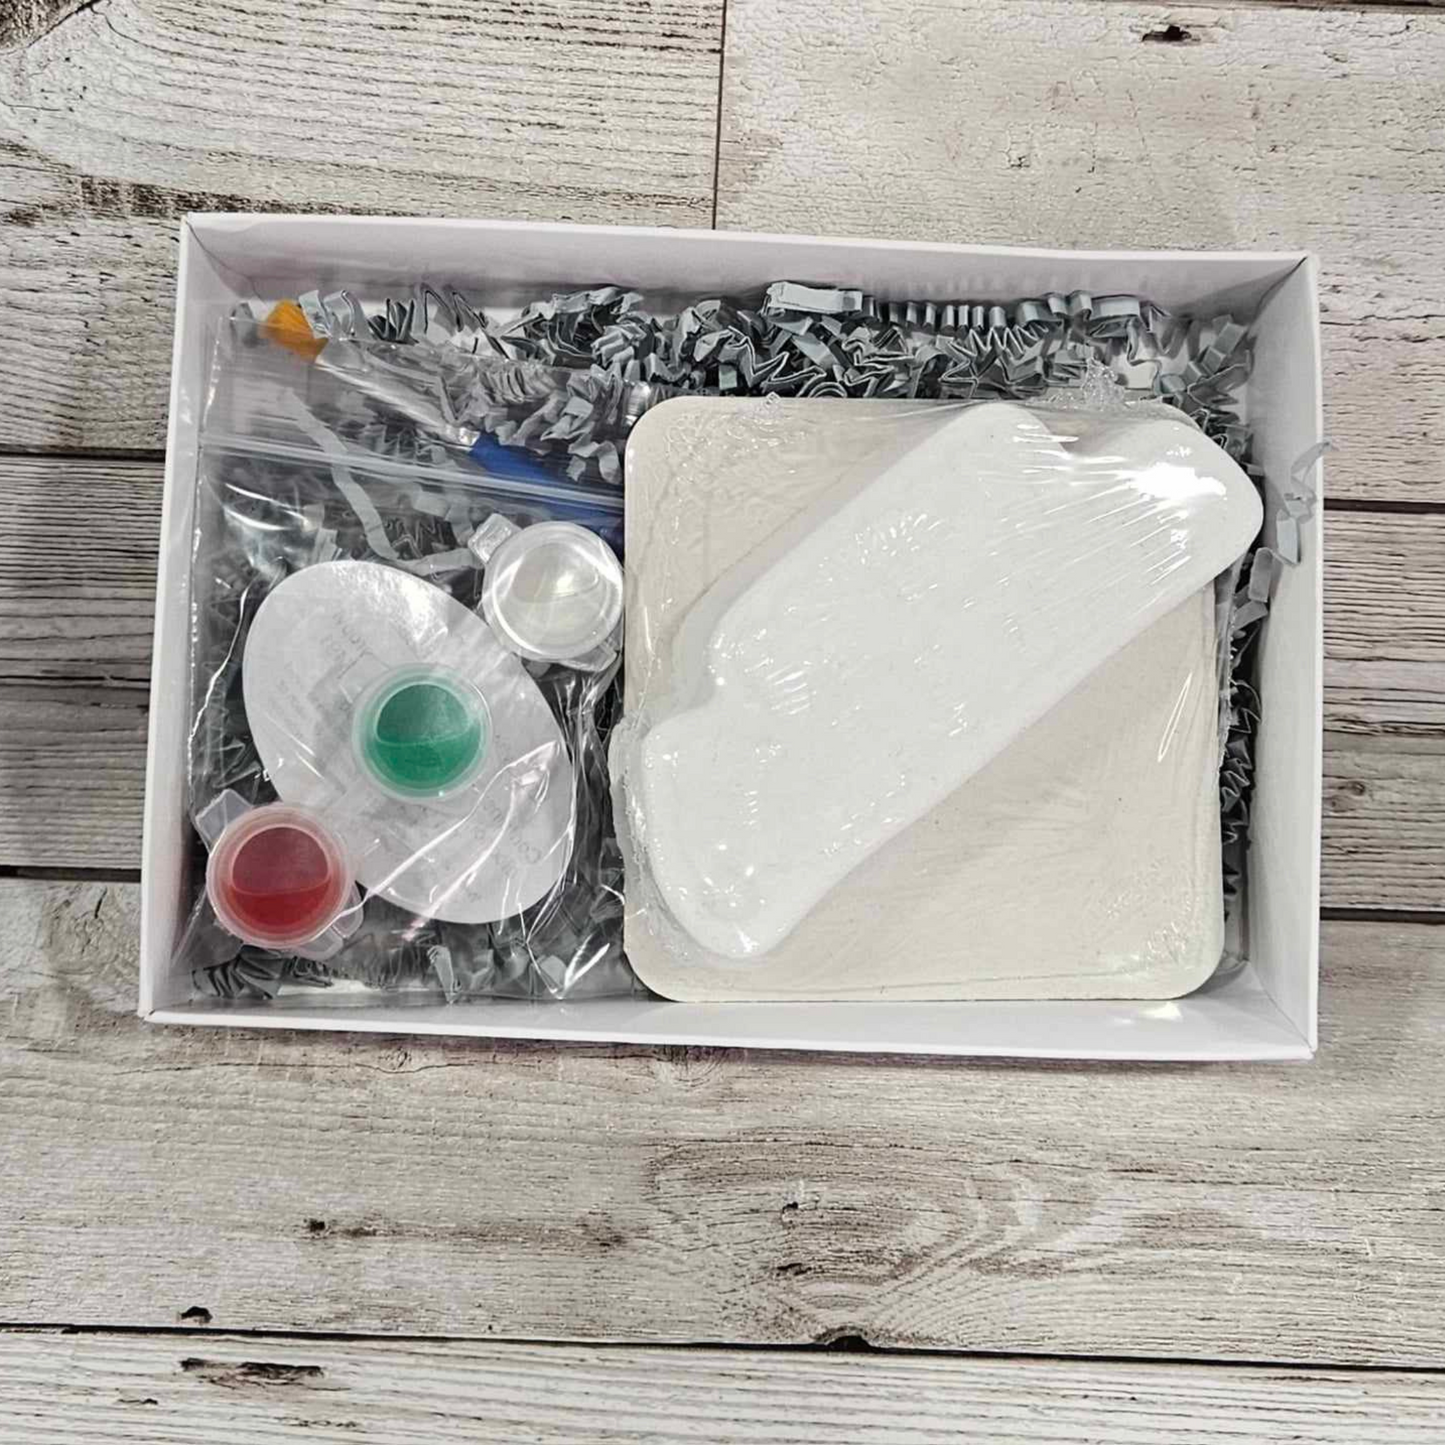 'Merry Christmas' Paint your own Bath Bomb kit